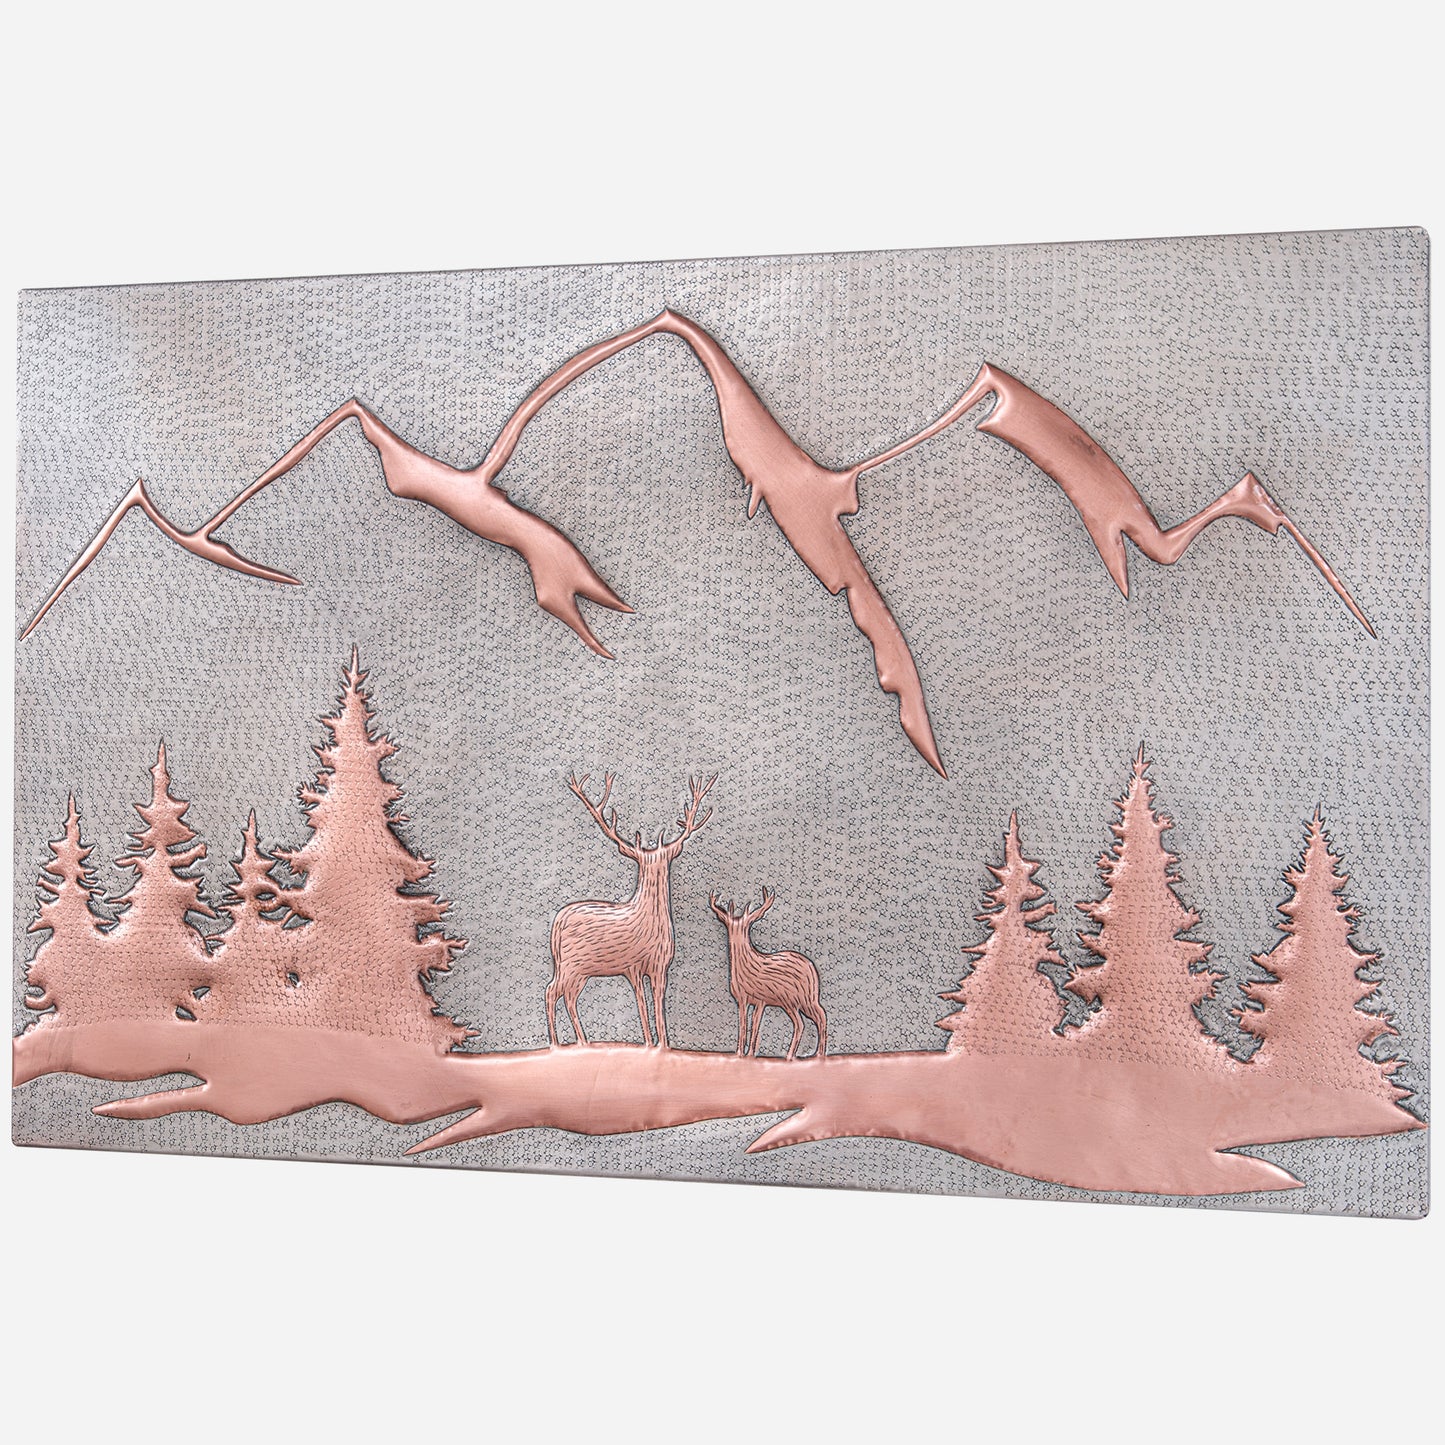 Deer Scene Kitchen Backsplash Tile 18"x30" Gray&Copper